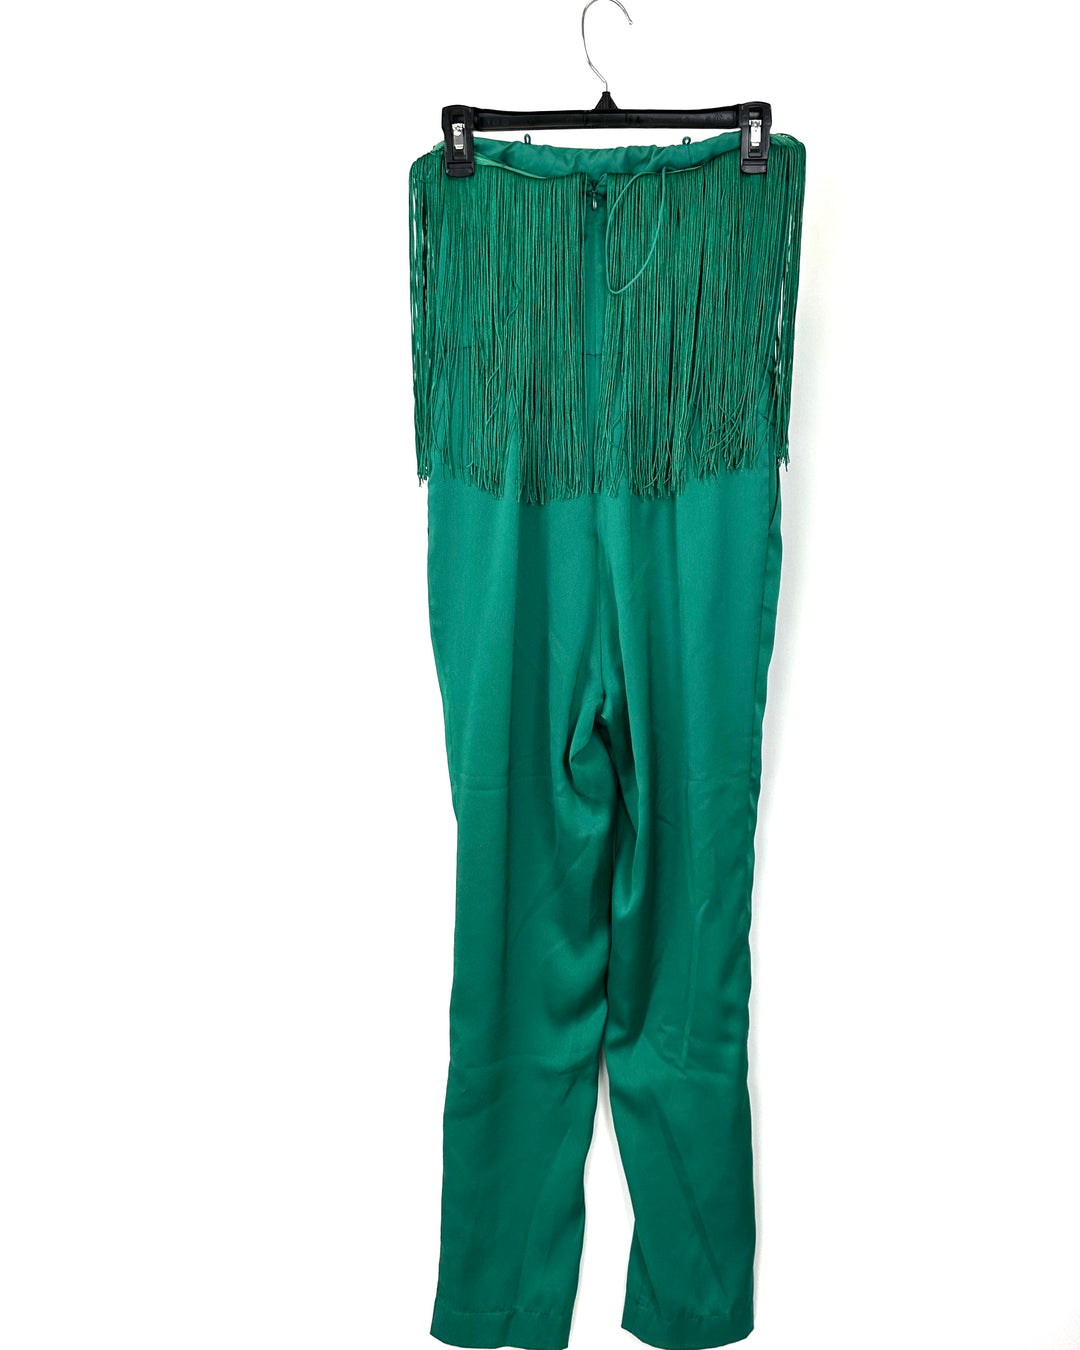 Emerald Green Fringe Jumpsuit - Small